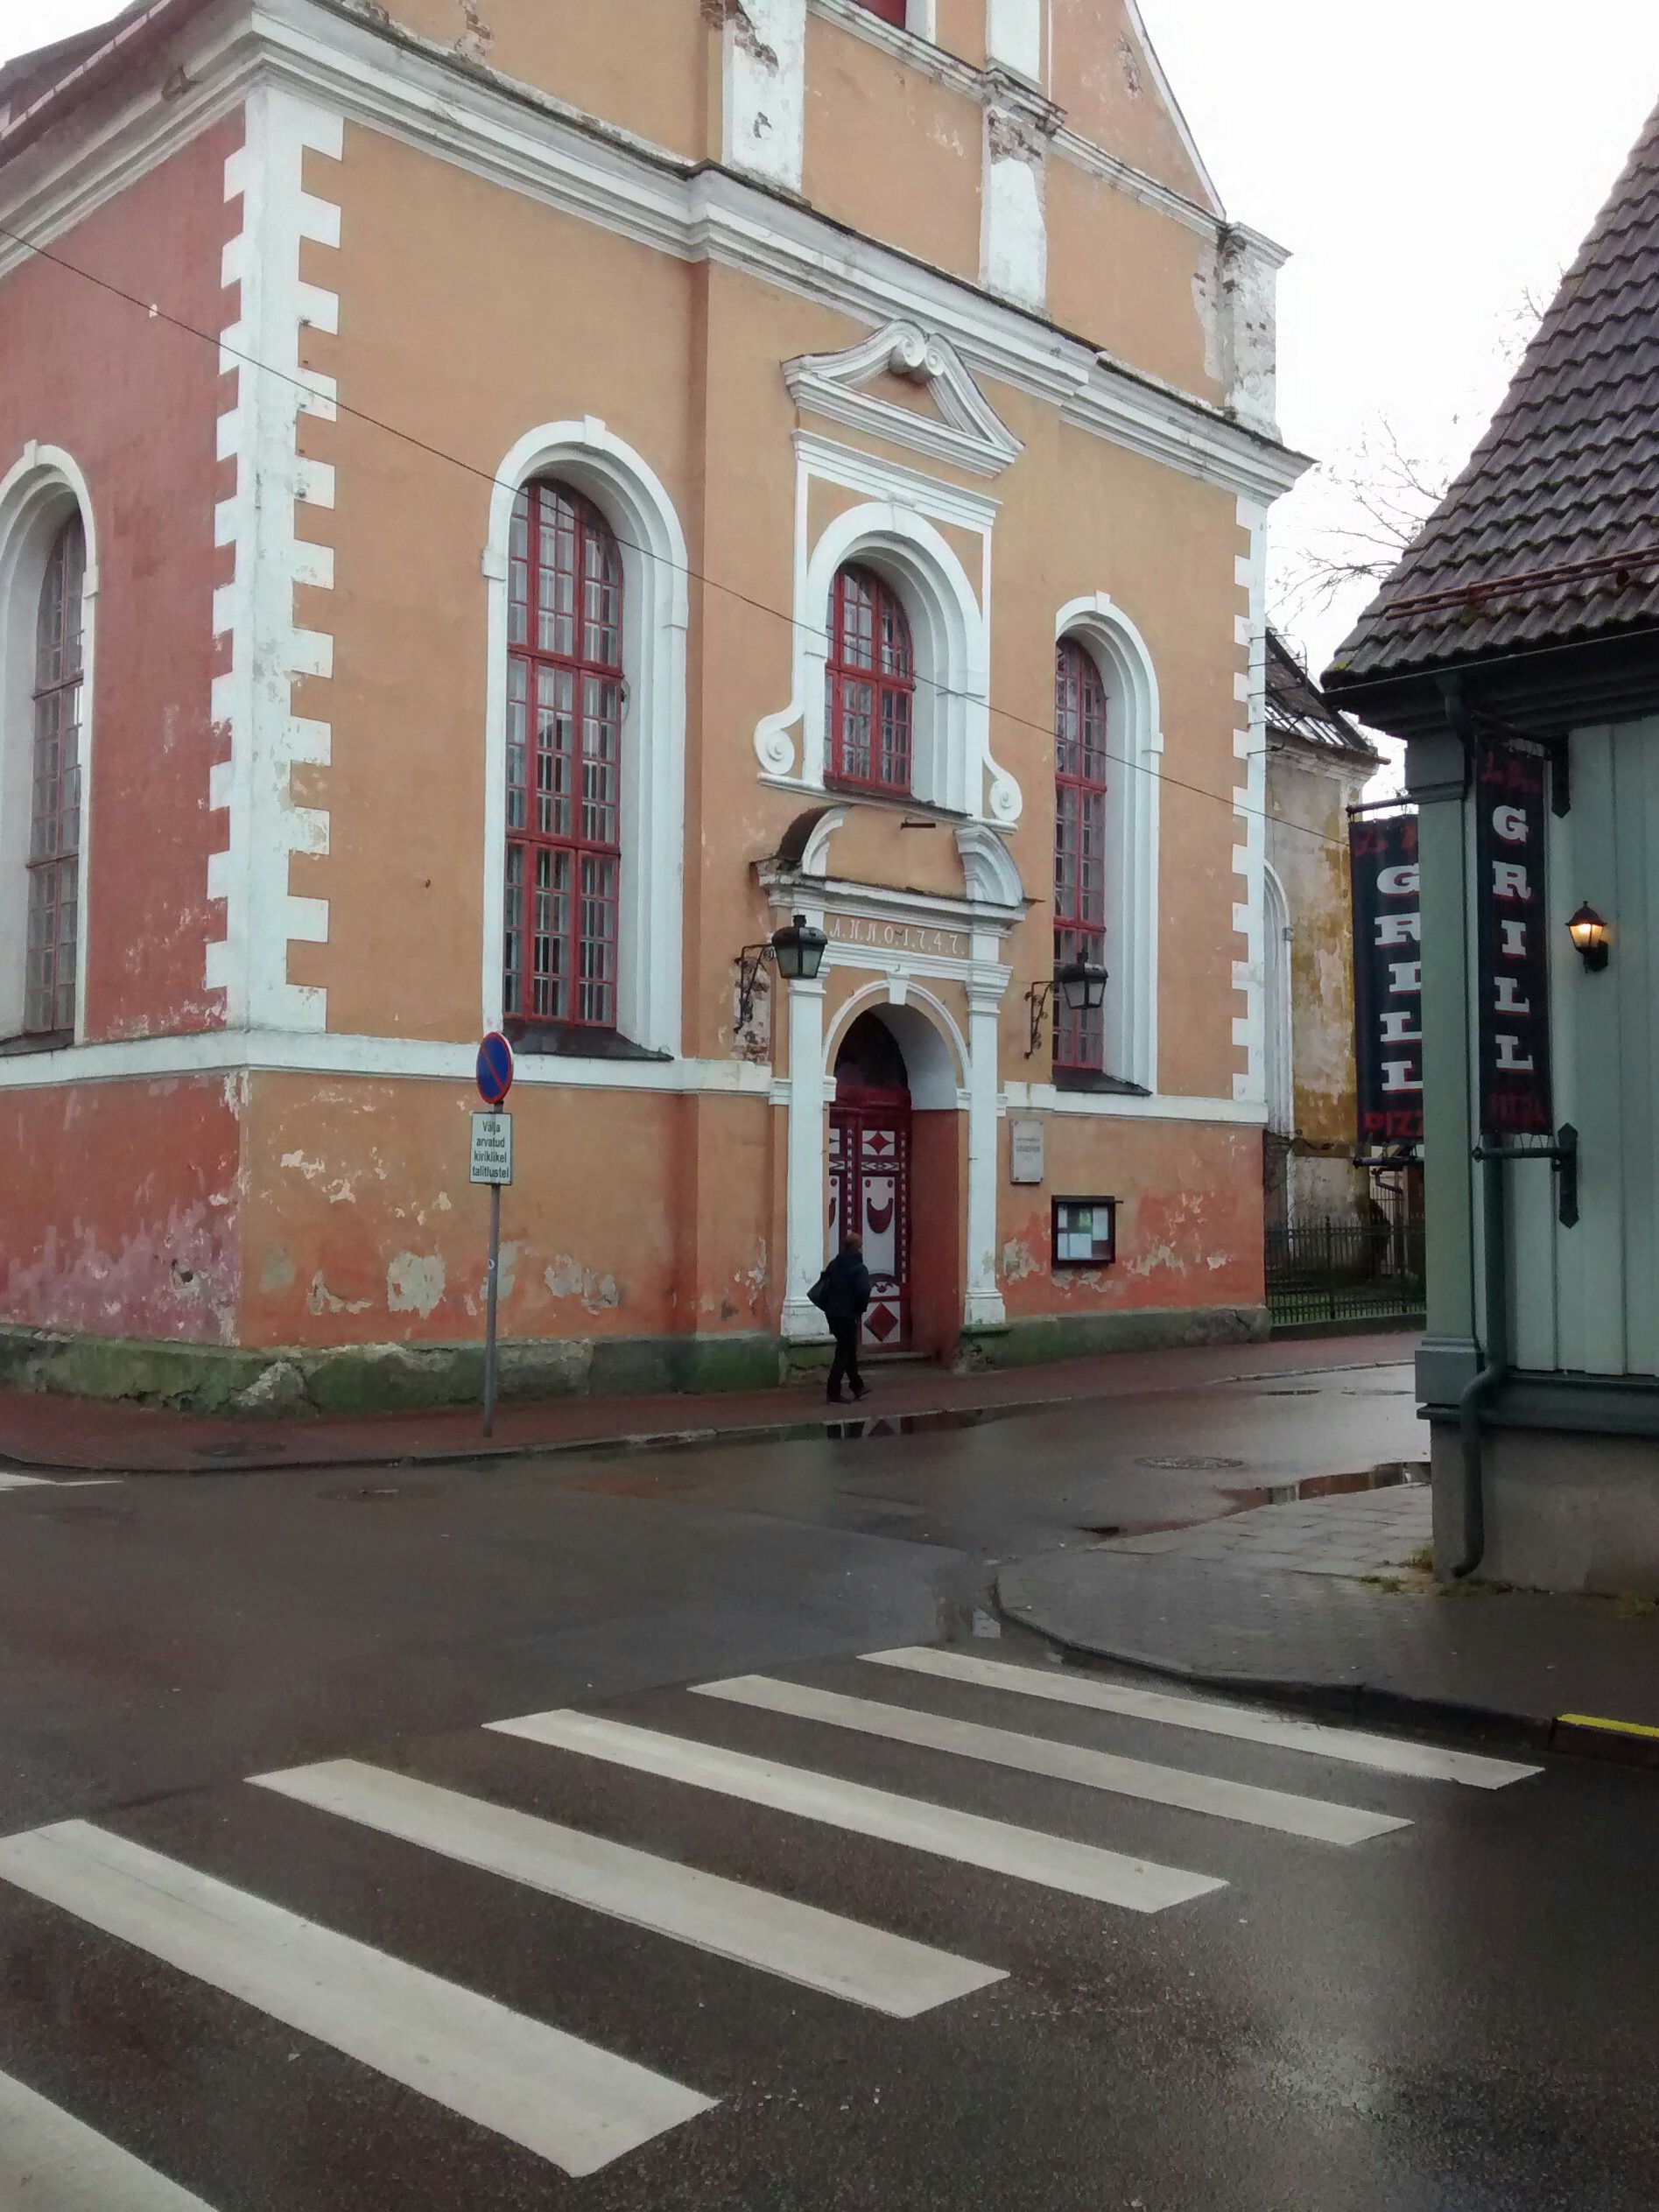 Pärnu, fragment from the church. rephoto